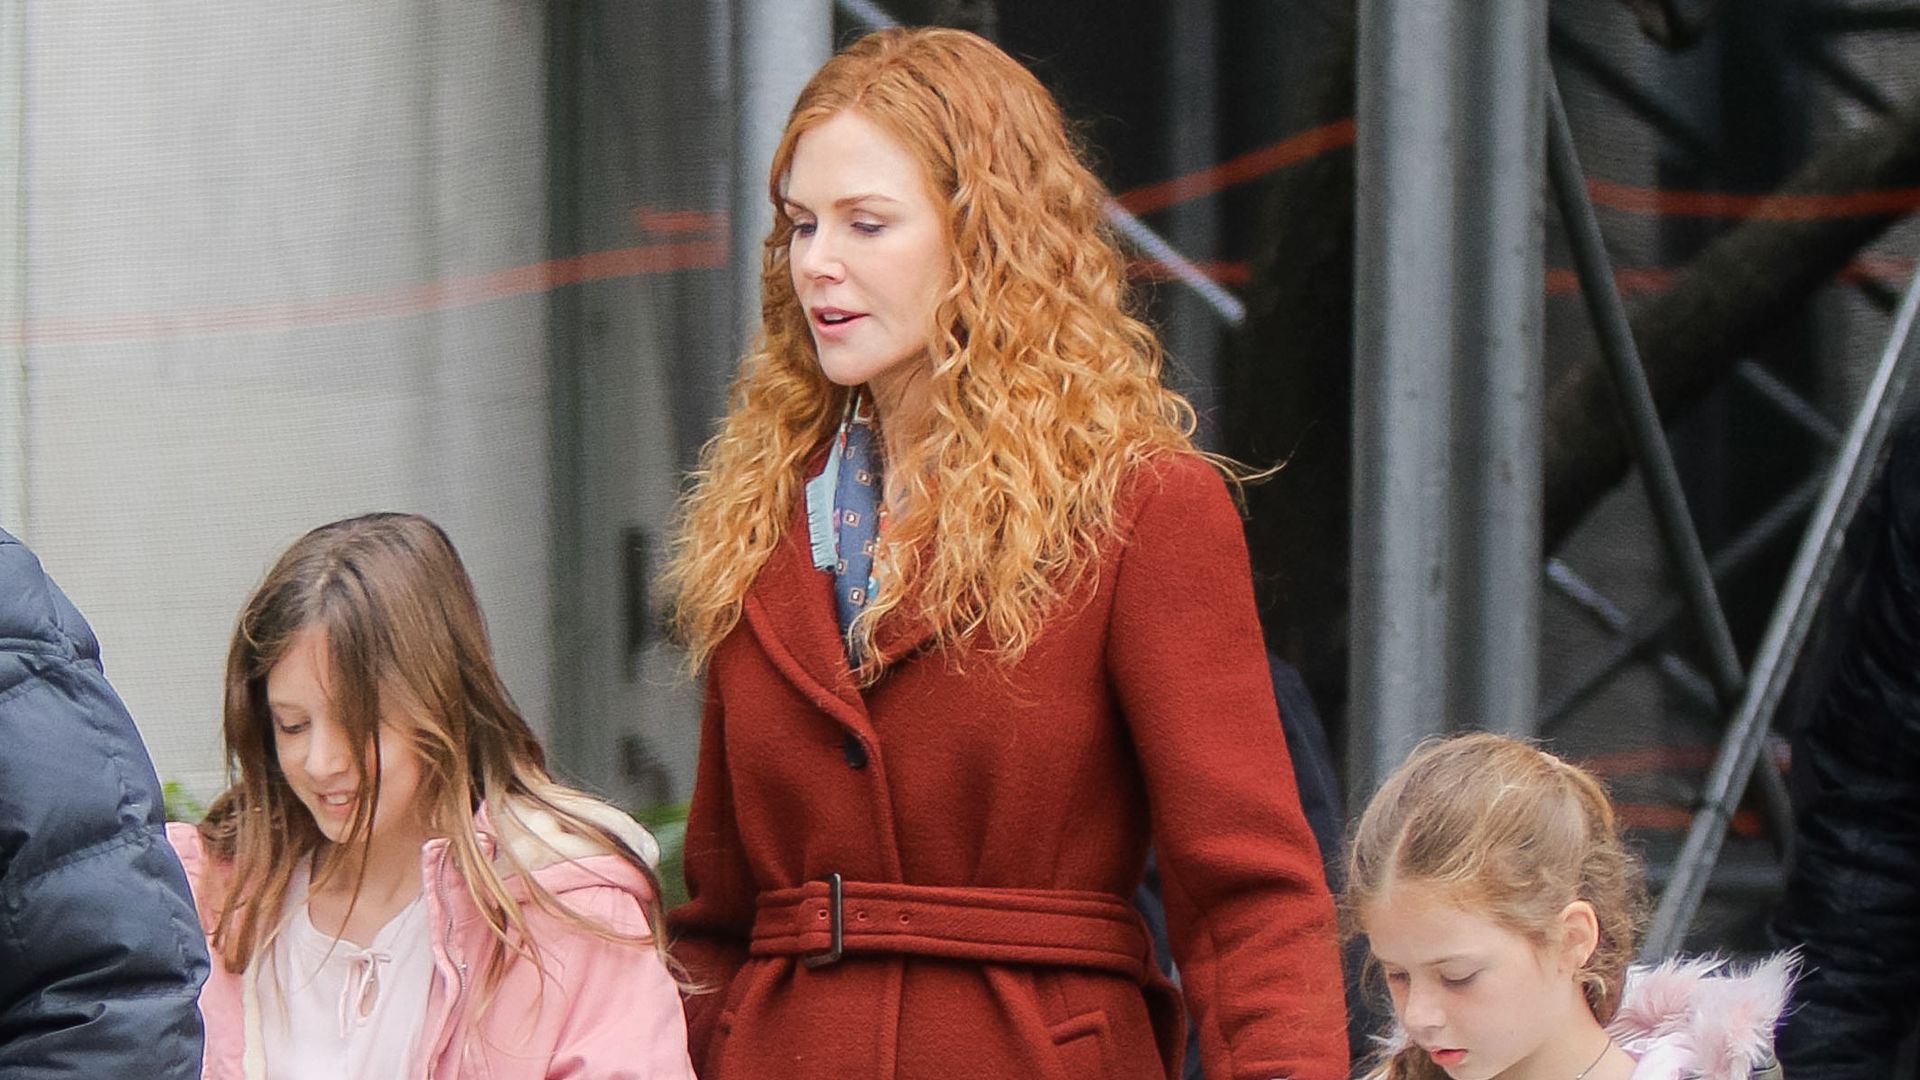 Nicole Kidman walking with her daughters